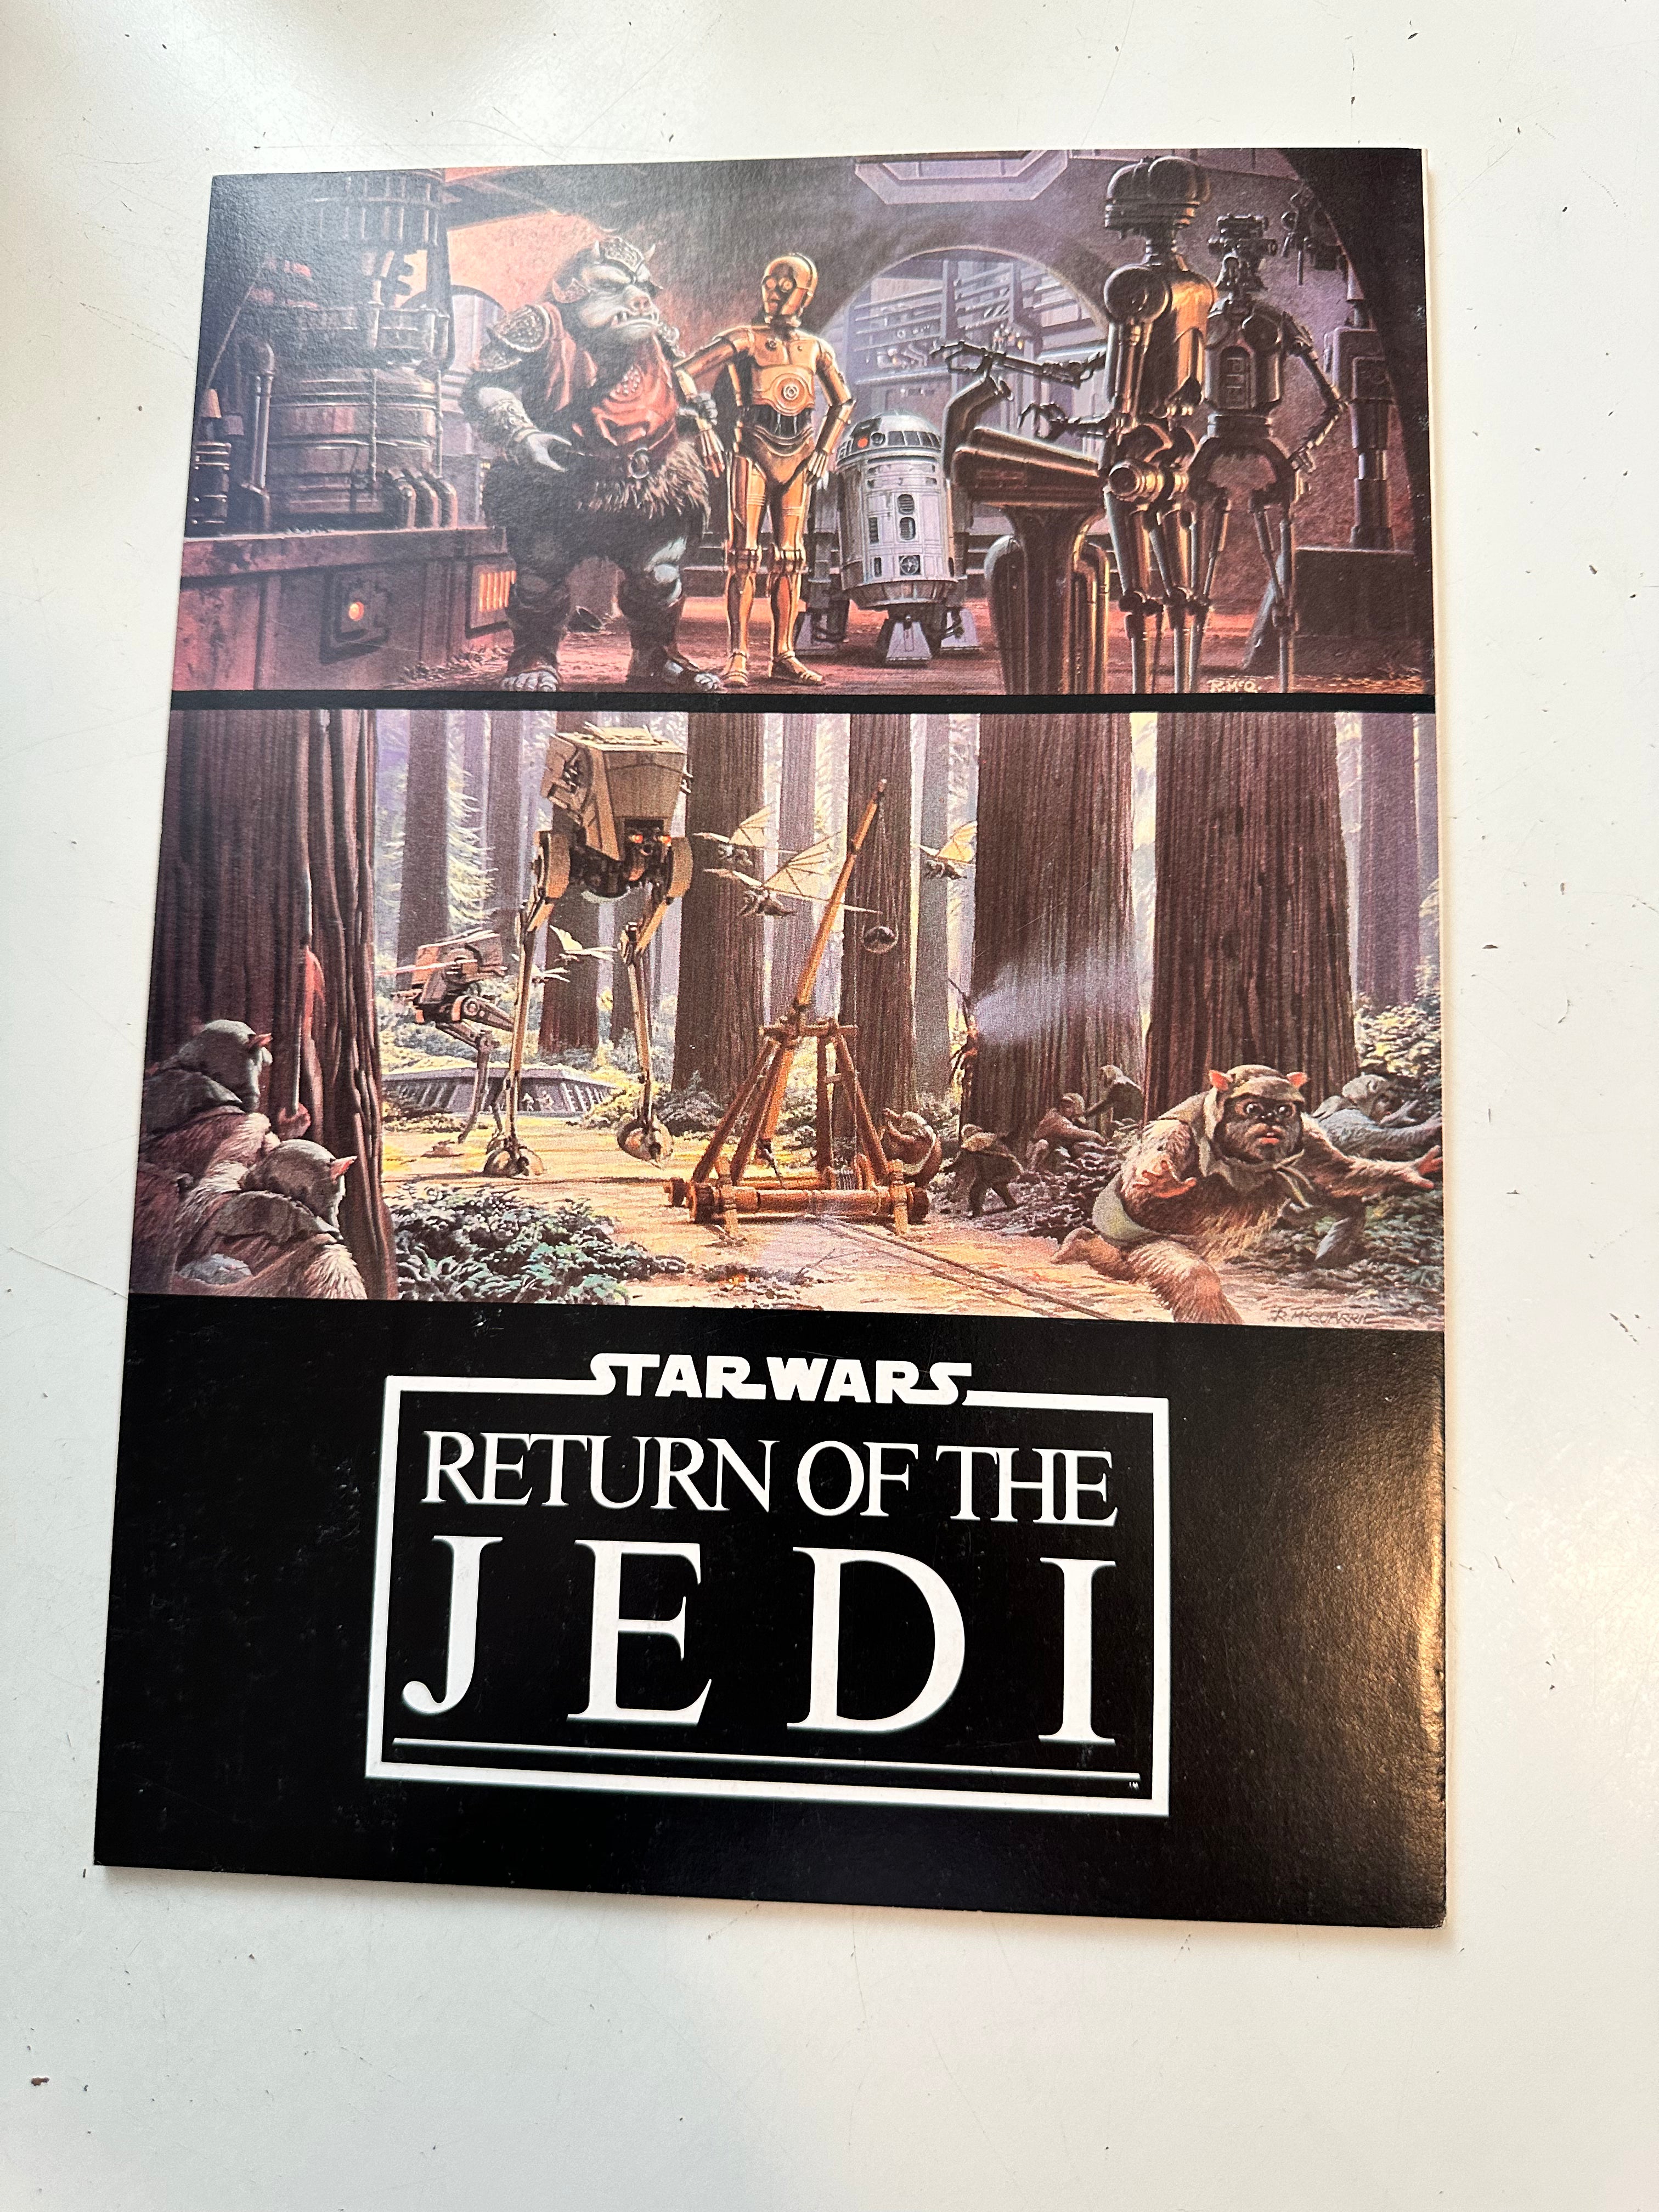 Star Wars Return of the Jedi collectors edition soft cover book 1983